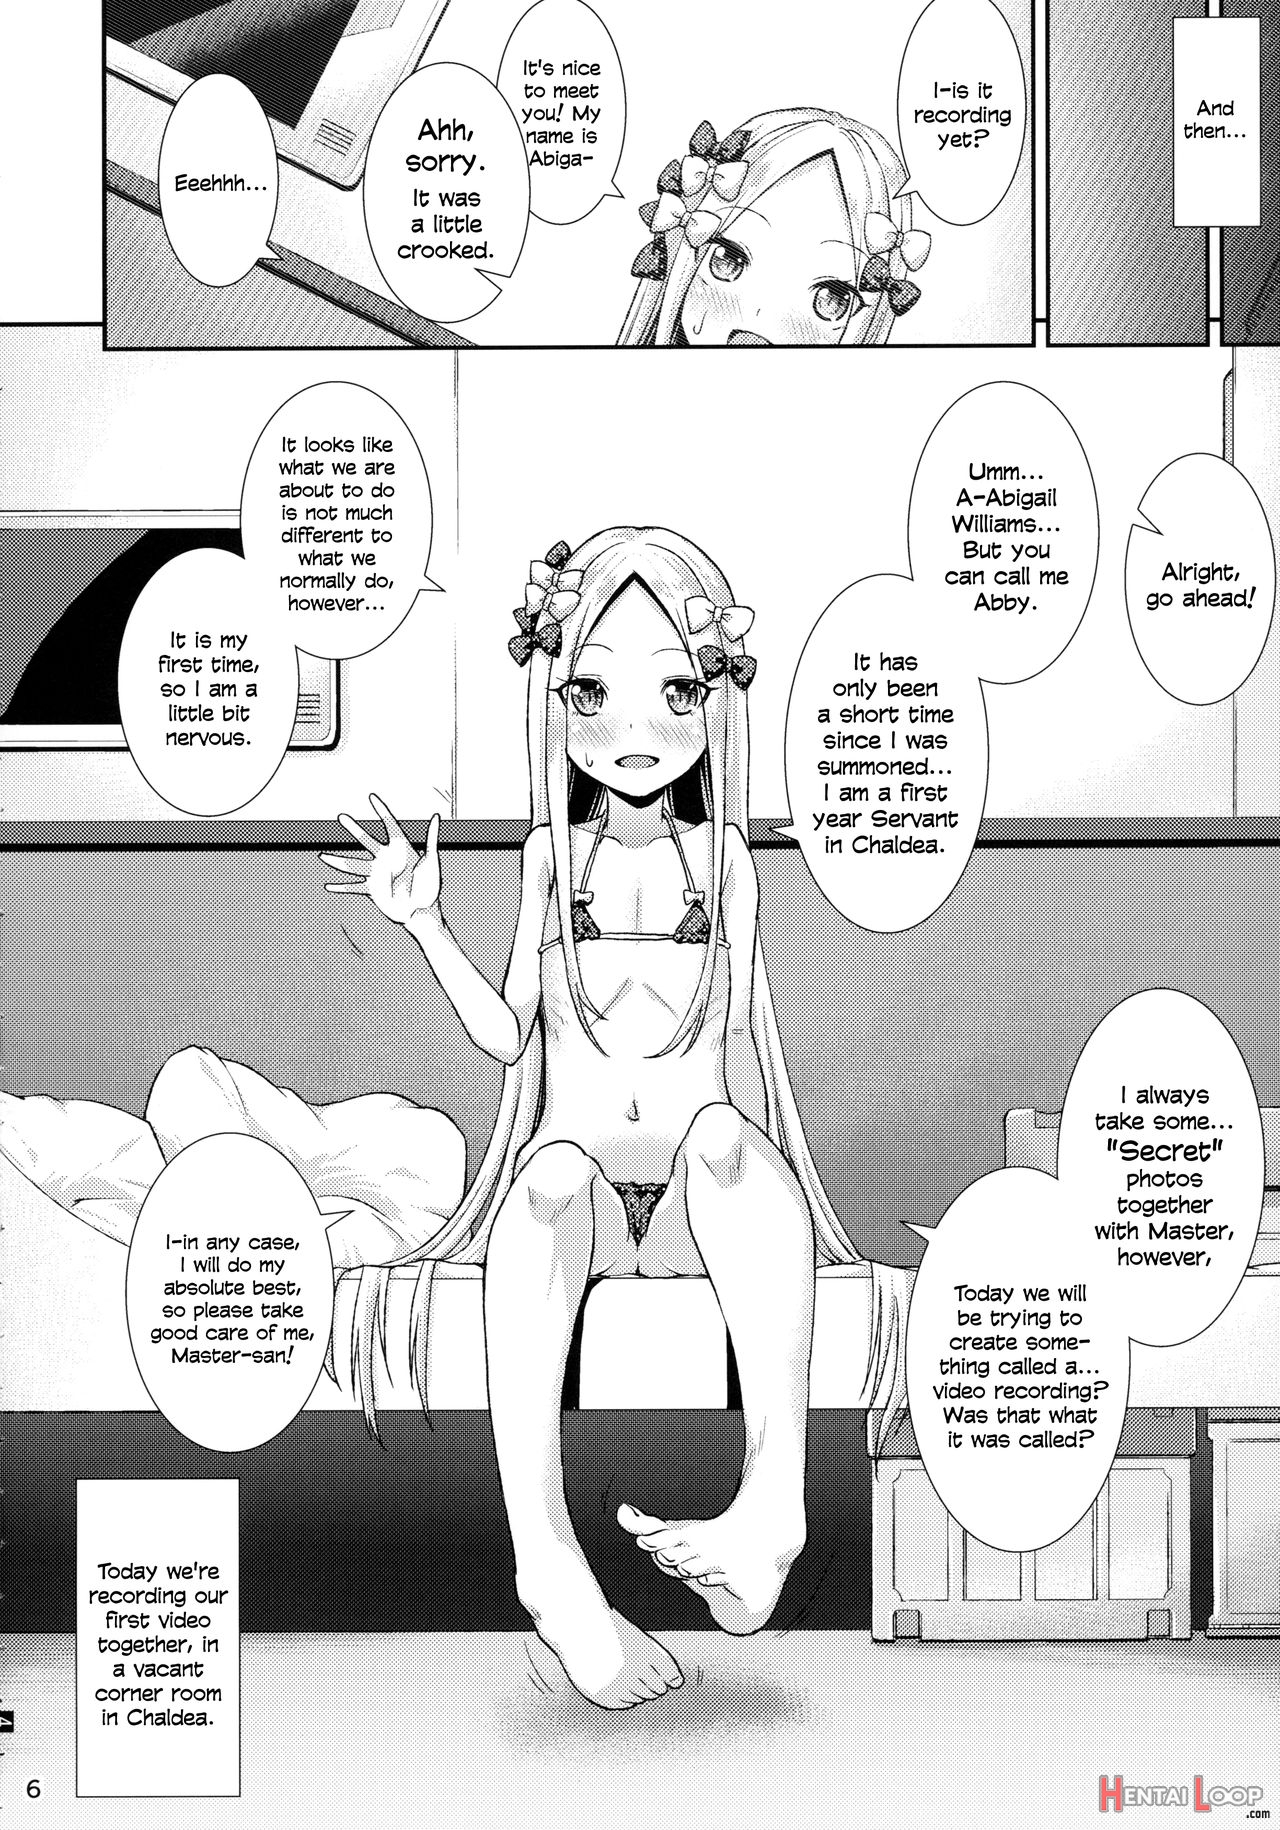 Page 5 of Abby And The Secret Homemade Sex Tape (by Yamazaki Kana)